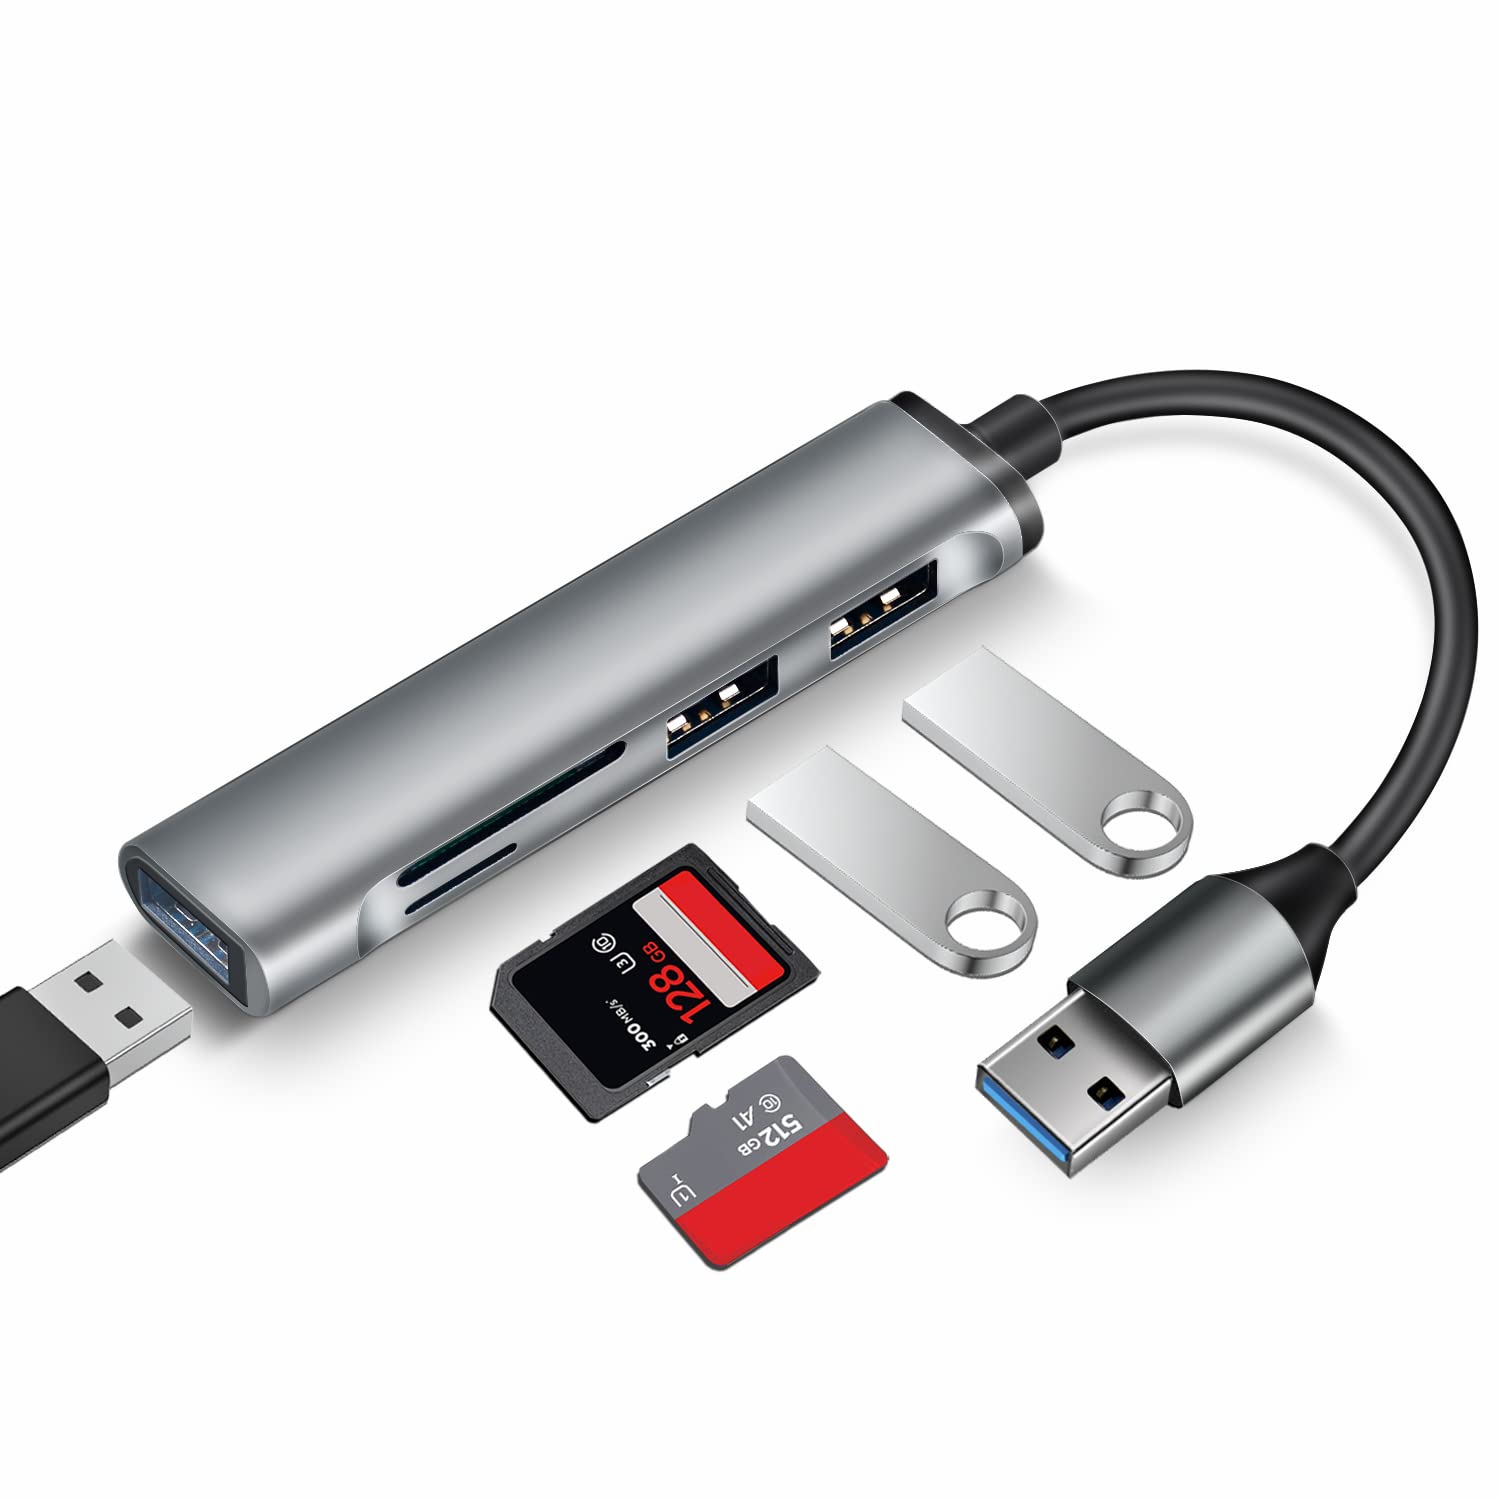 USB Hub, 5 in 1 USB Port Expander, USB 3.0 Hub Multiport , USB Splitter with SD/TF Cards Reader, USB Docking Station for Laptop, PC, Mac, MacBook, Aluminum